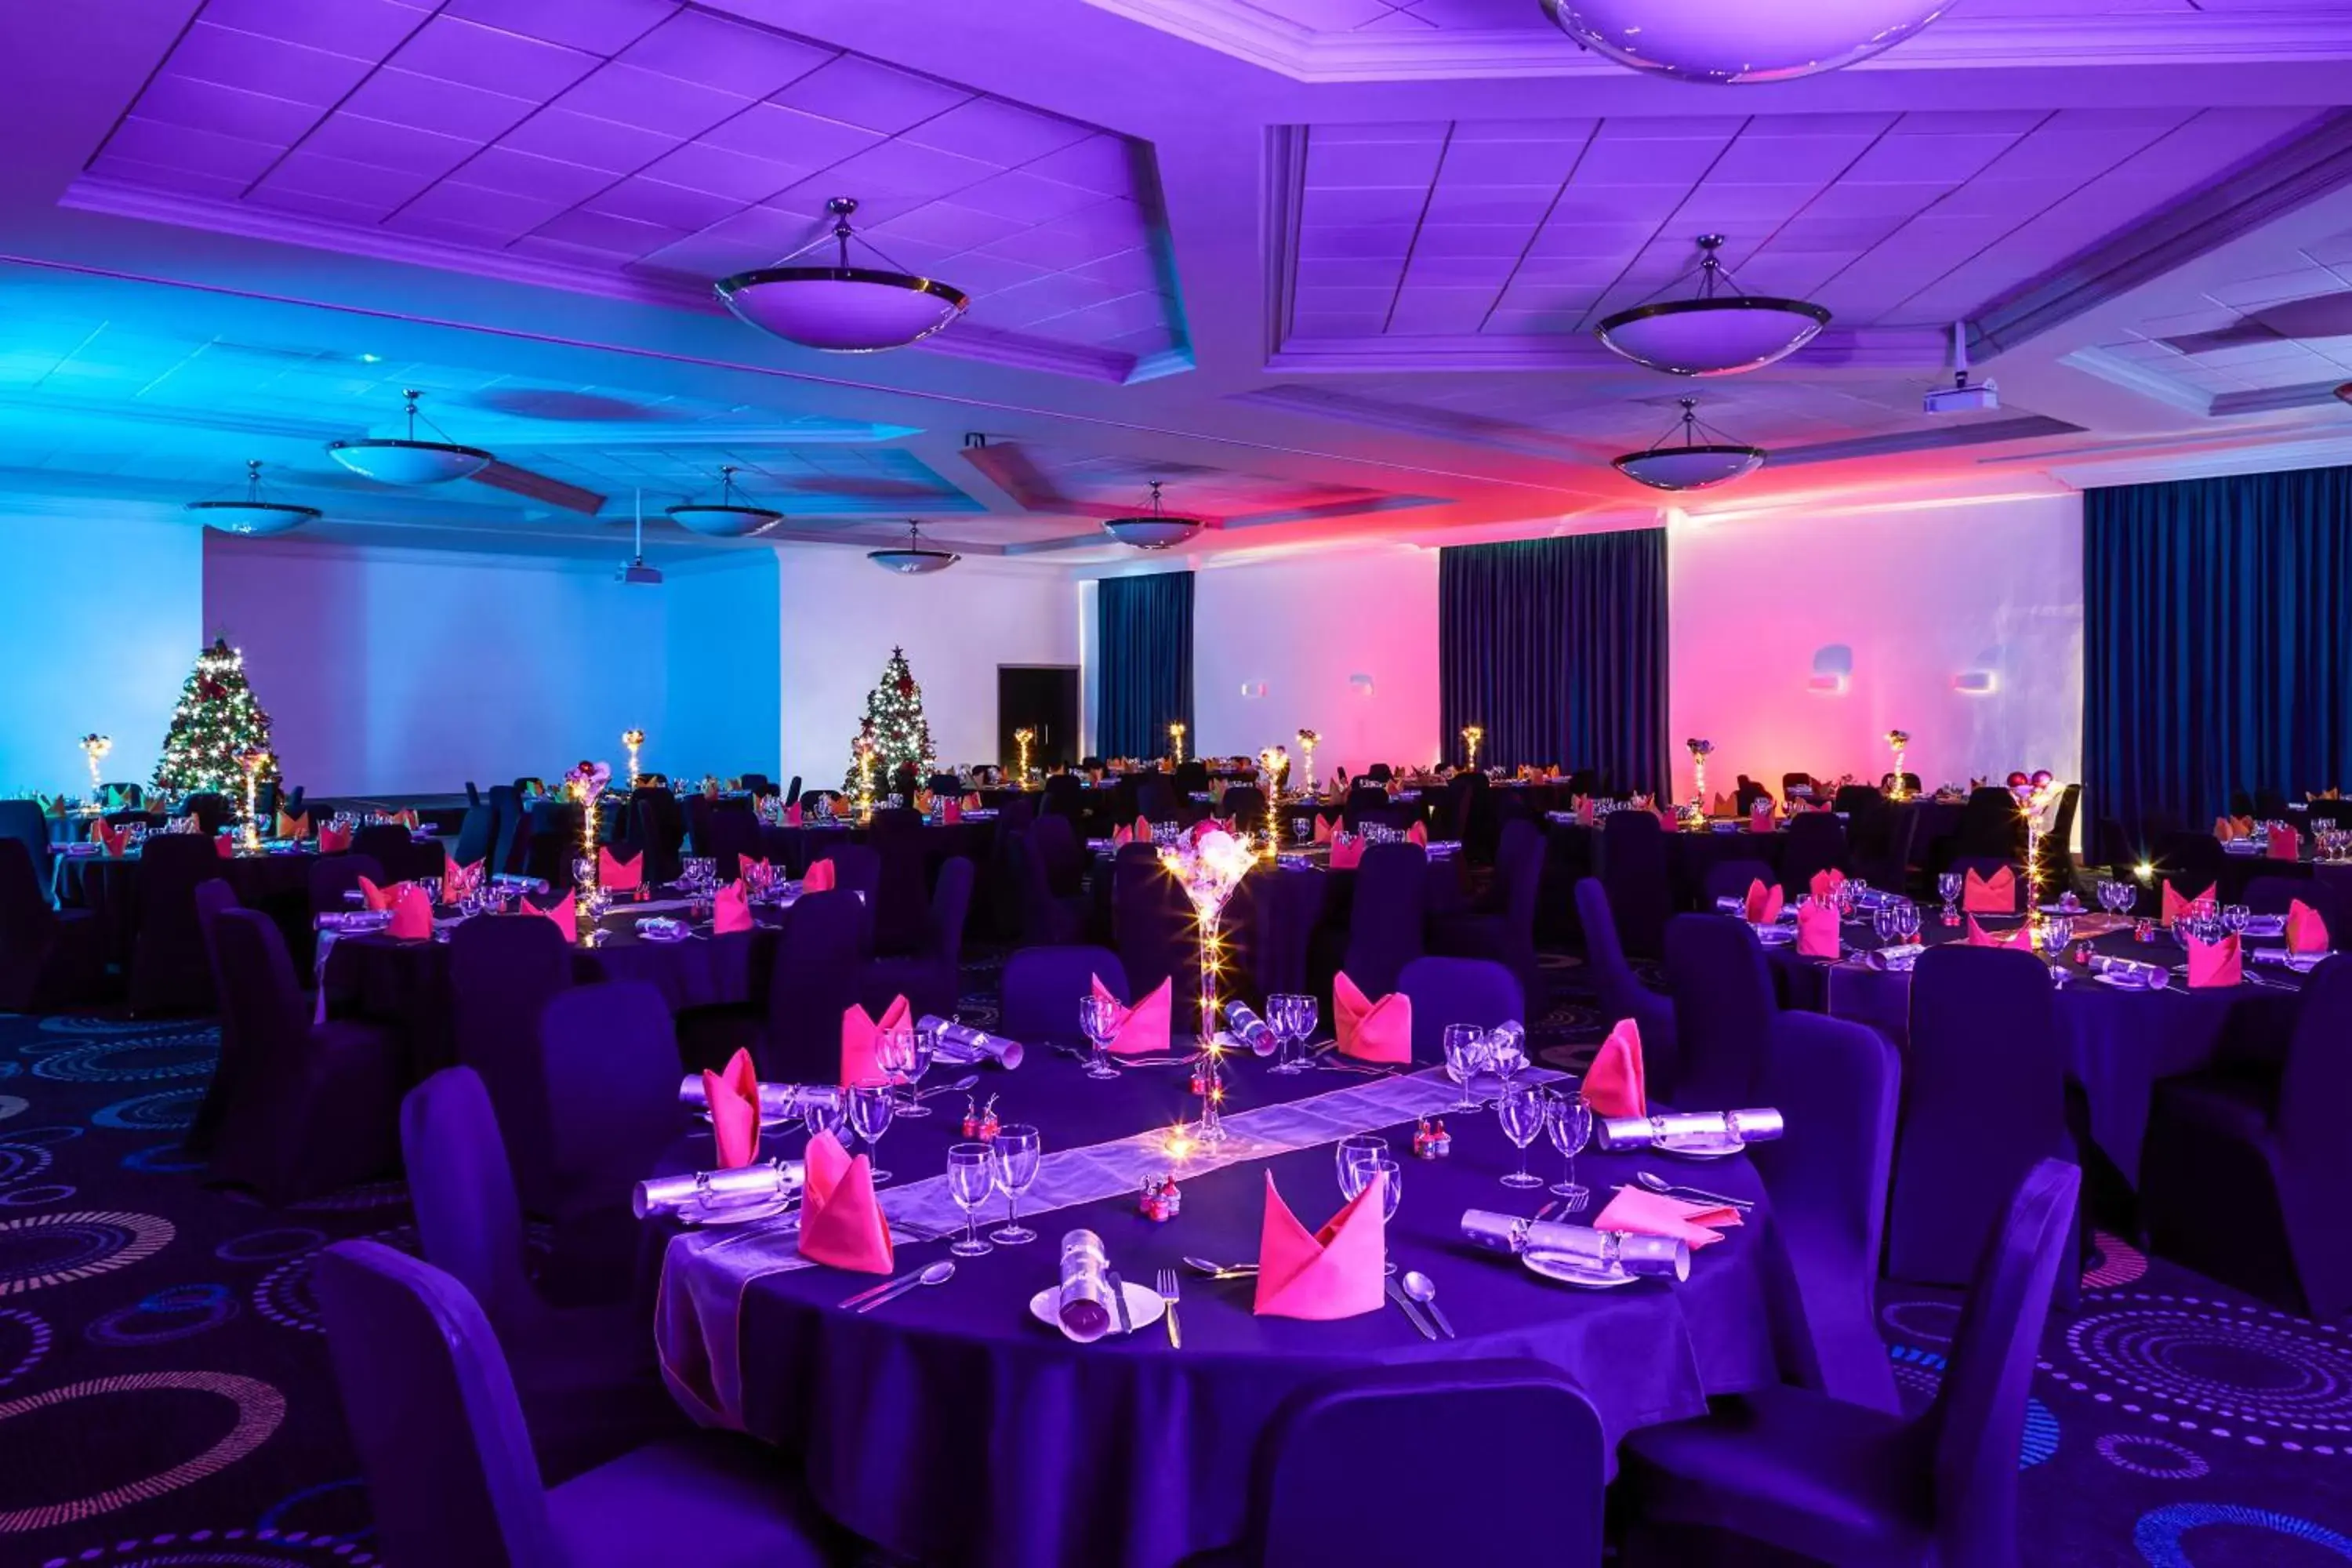 Banquet/Function facilities, Banquet Facilities in Mercure Telford Centre Hotel